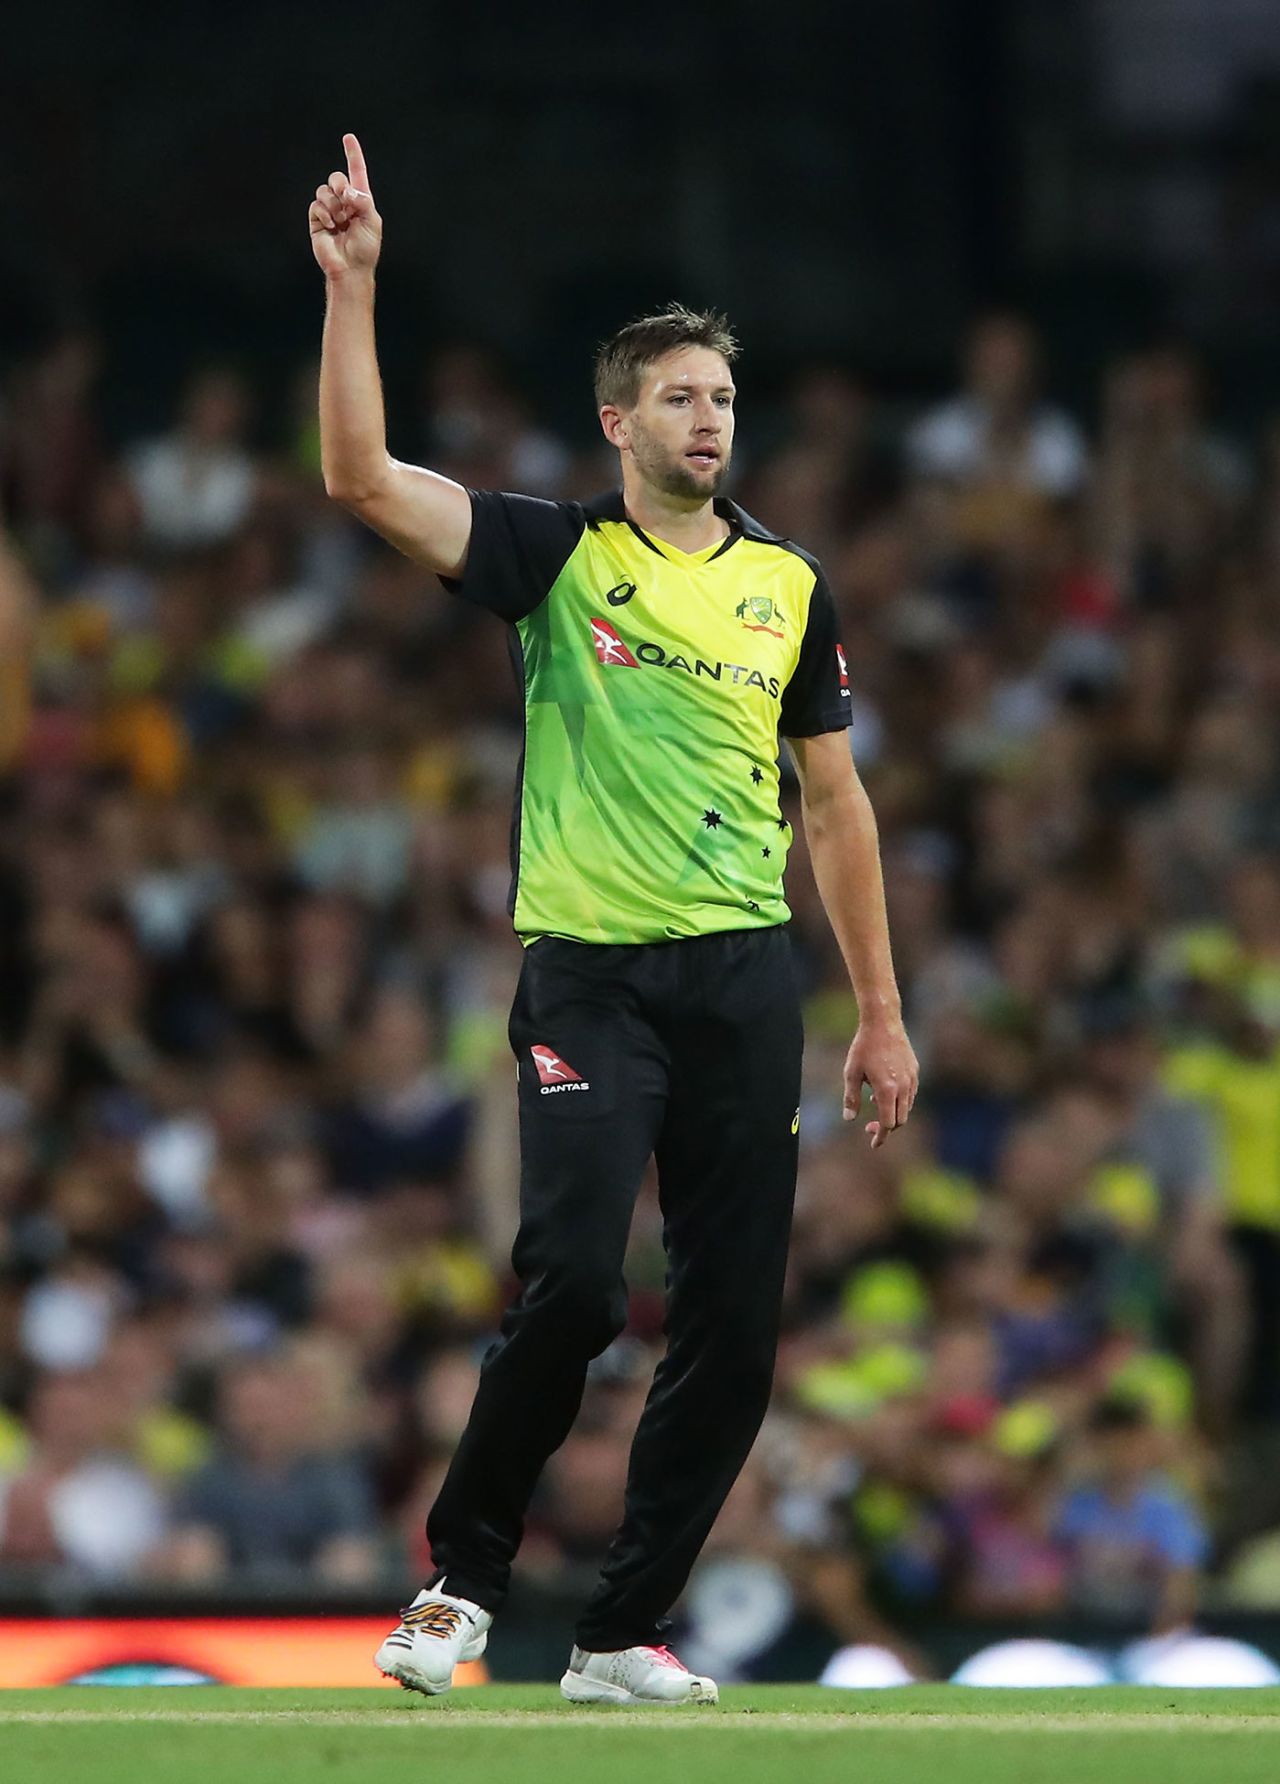 Andrew Tye picked up four wickets, Australia v New Zealand, Trans-Tasman T20, Sydney, February 3, 2018